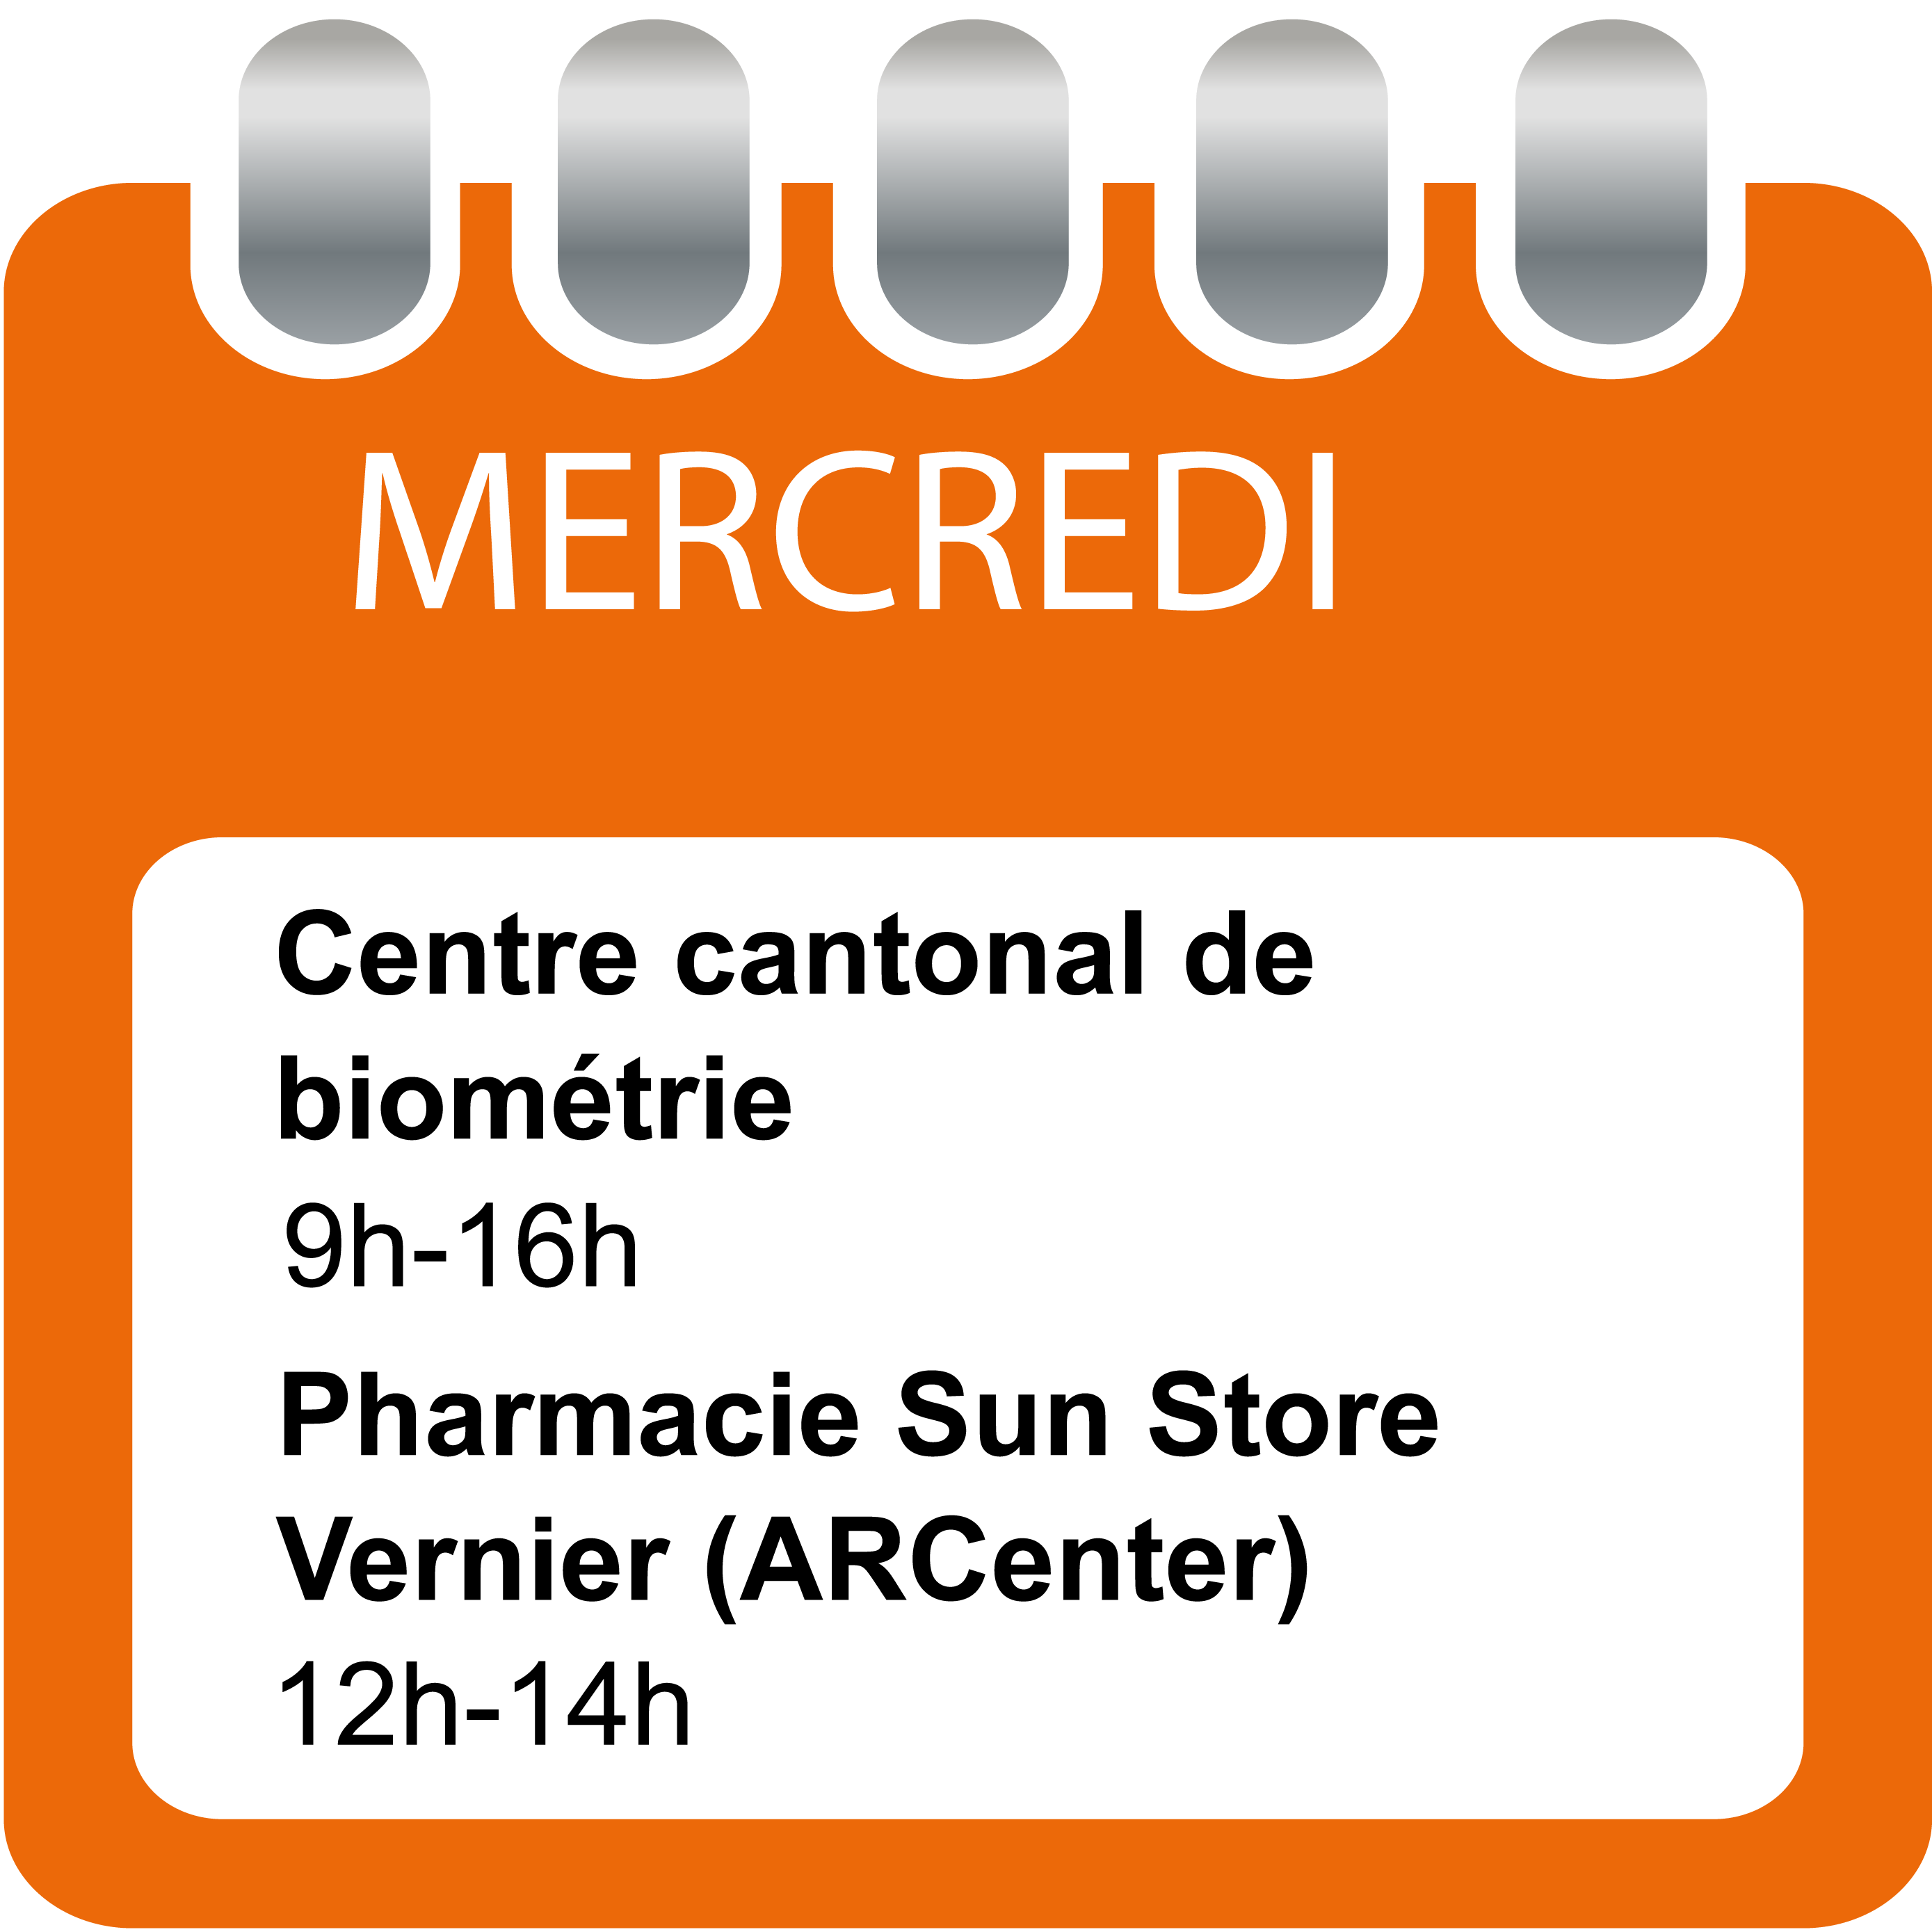 Mercredi - Centre cantonal de biométrie (9h-16h) et Pharmacie Sun Store Vernier - ARCenter (12h-14h)